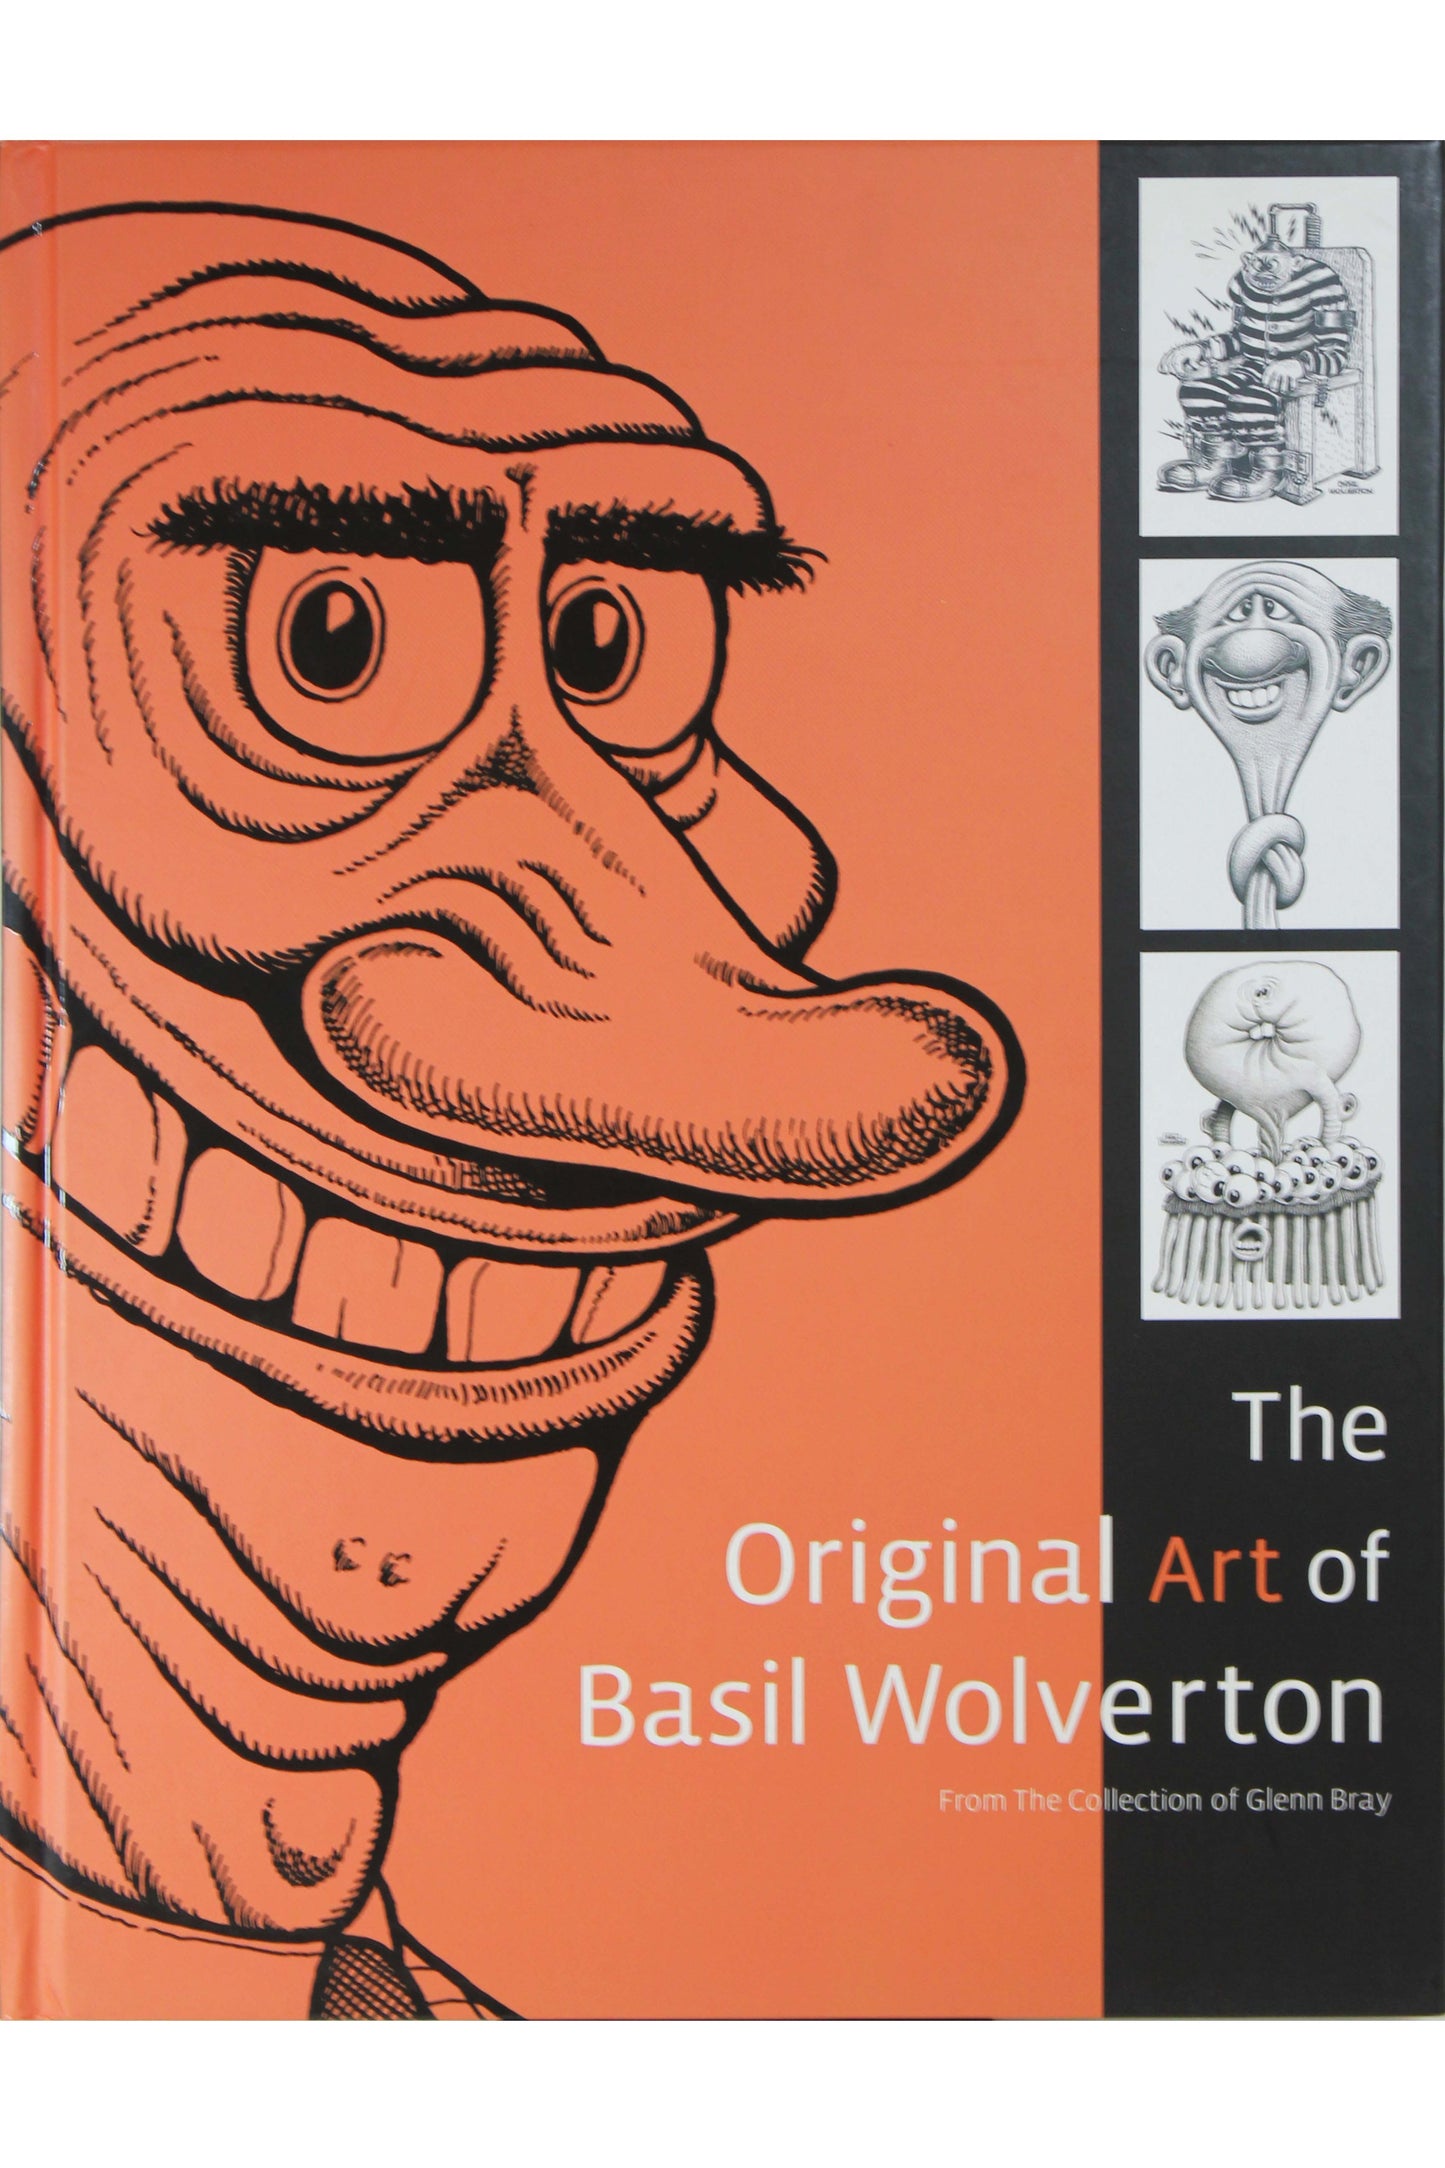 The Original Art of Basil Wolverton